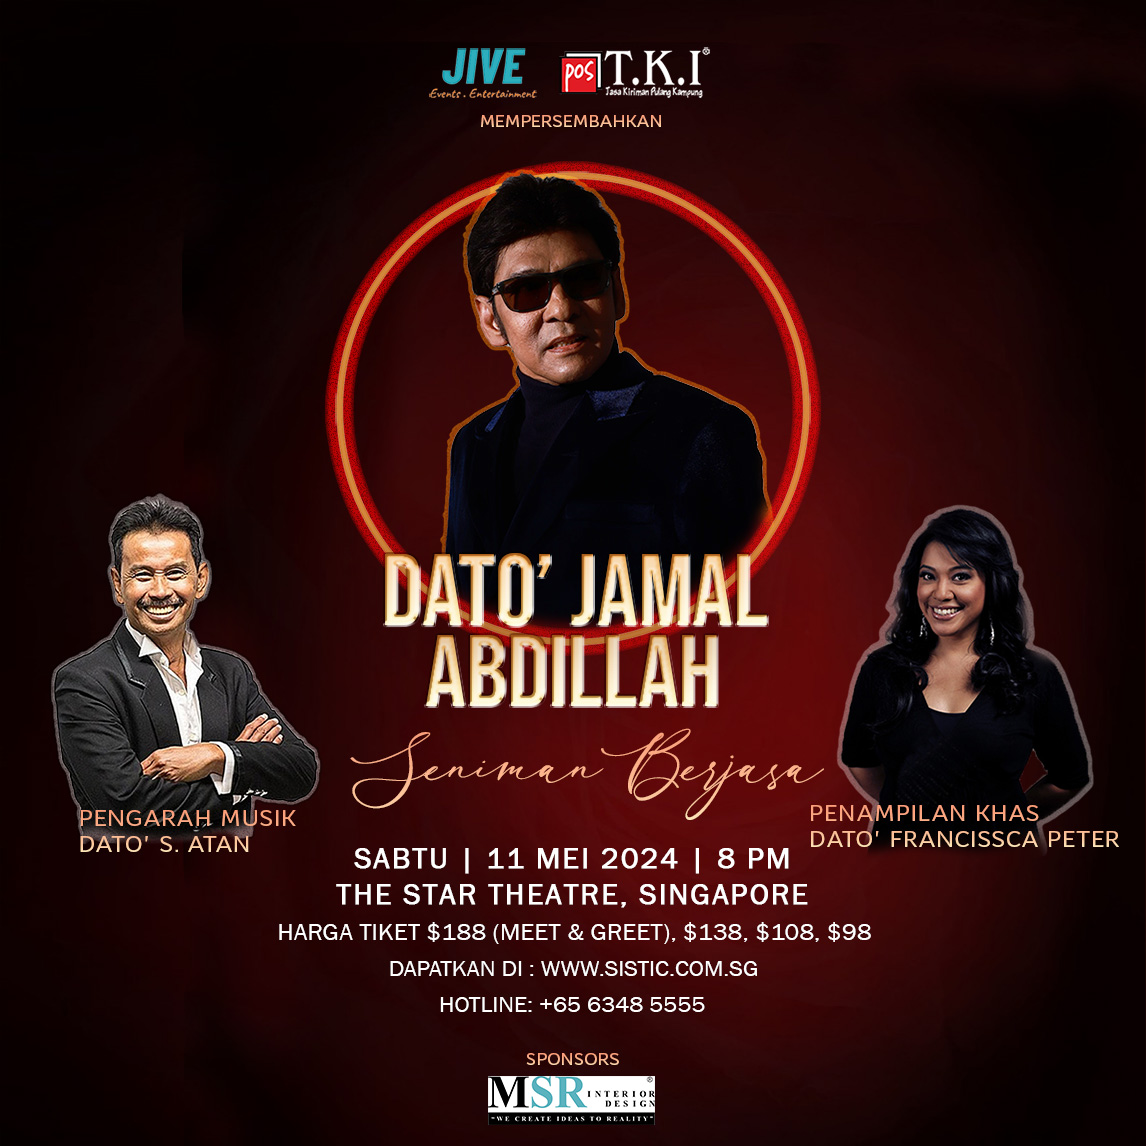 Konsert Dato' Jamal Abdillah Seniman Berjasa [G]